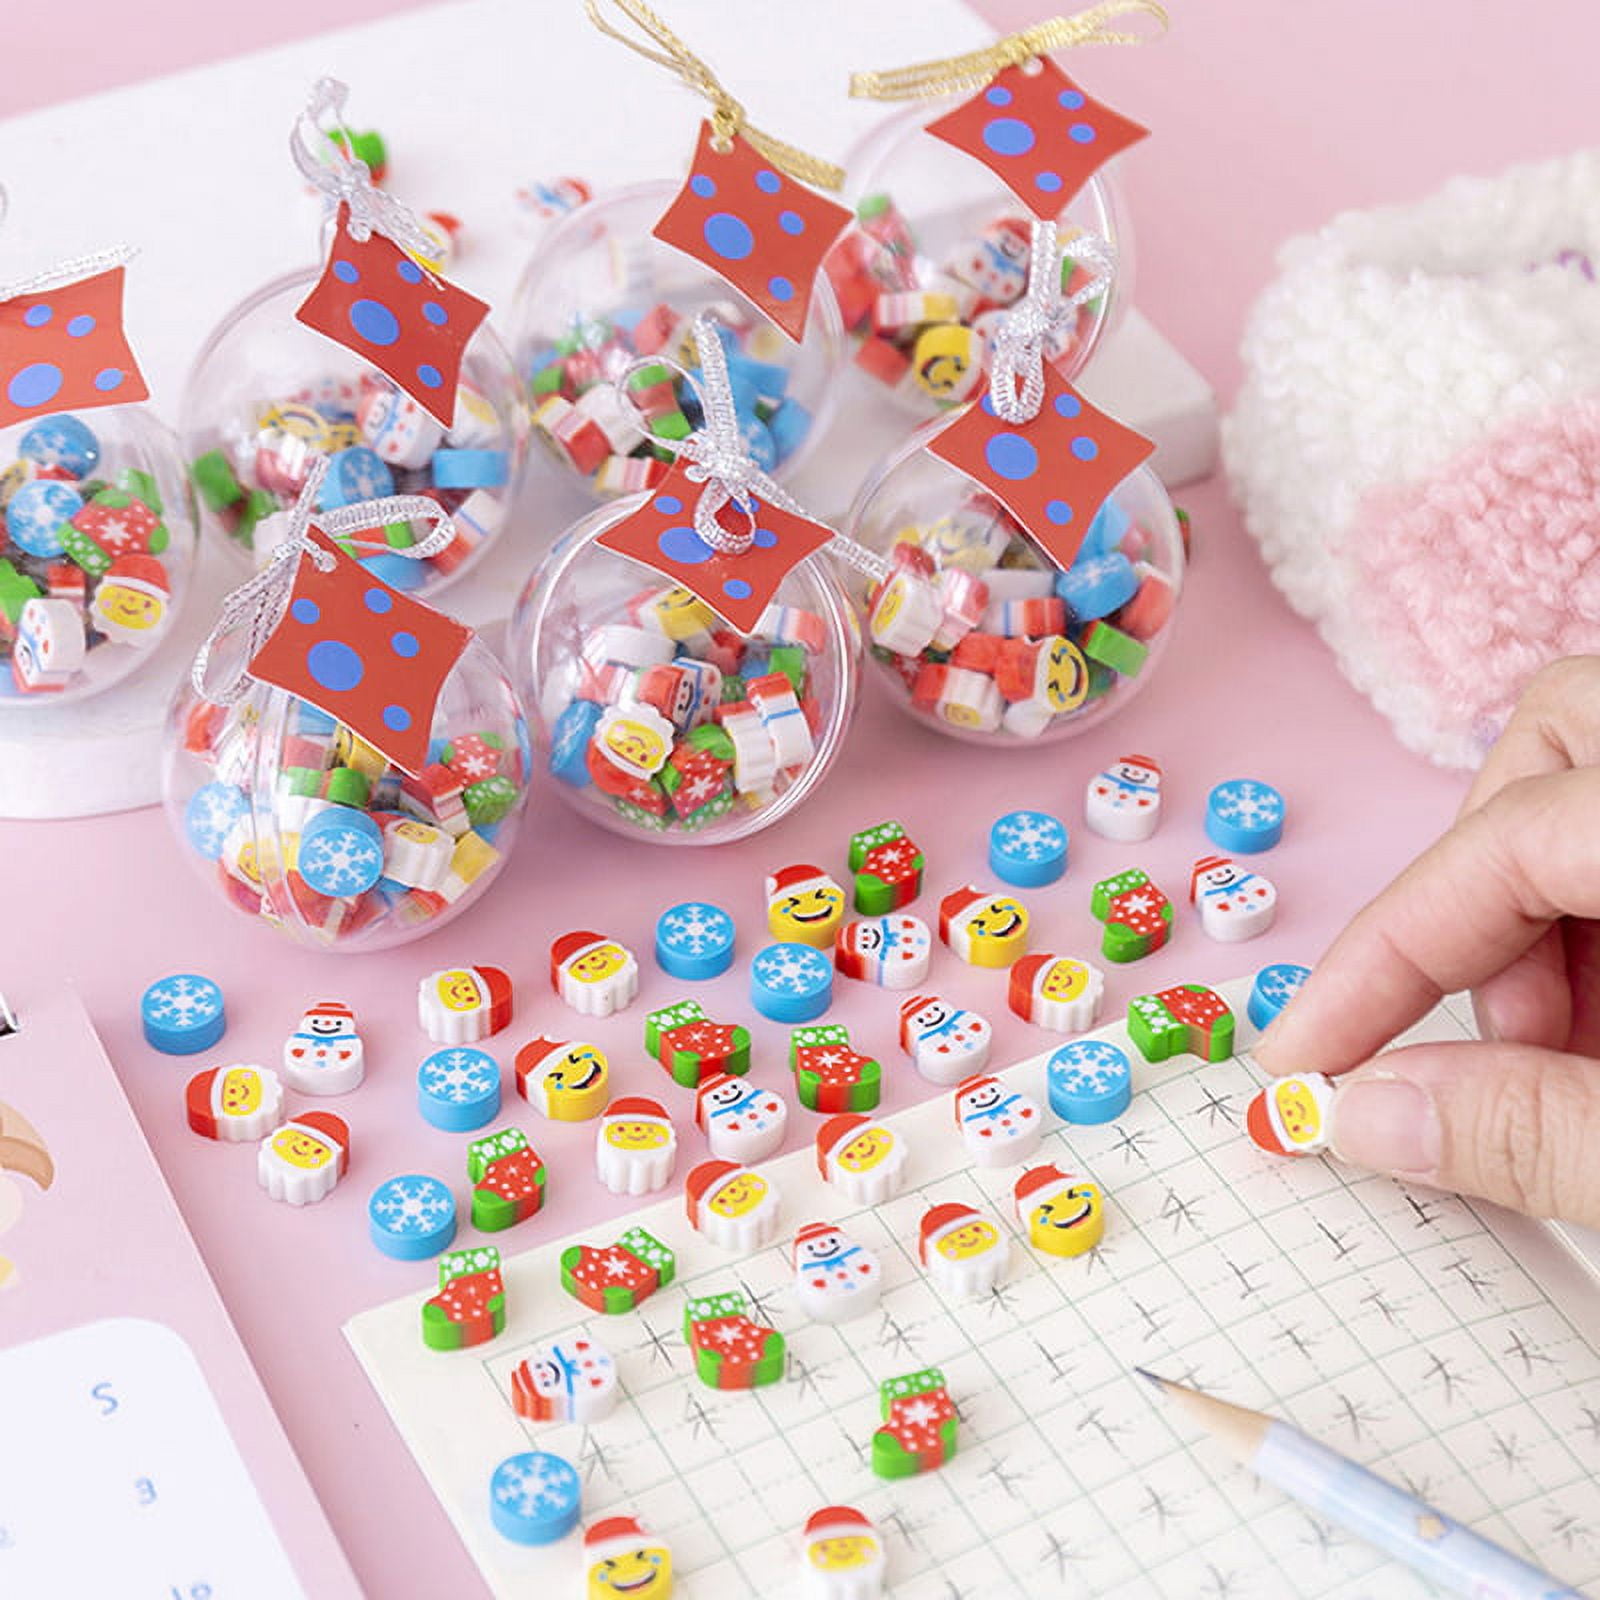 Snowflake Mini Erasers — Kindergarten Crate